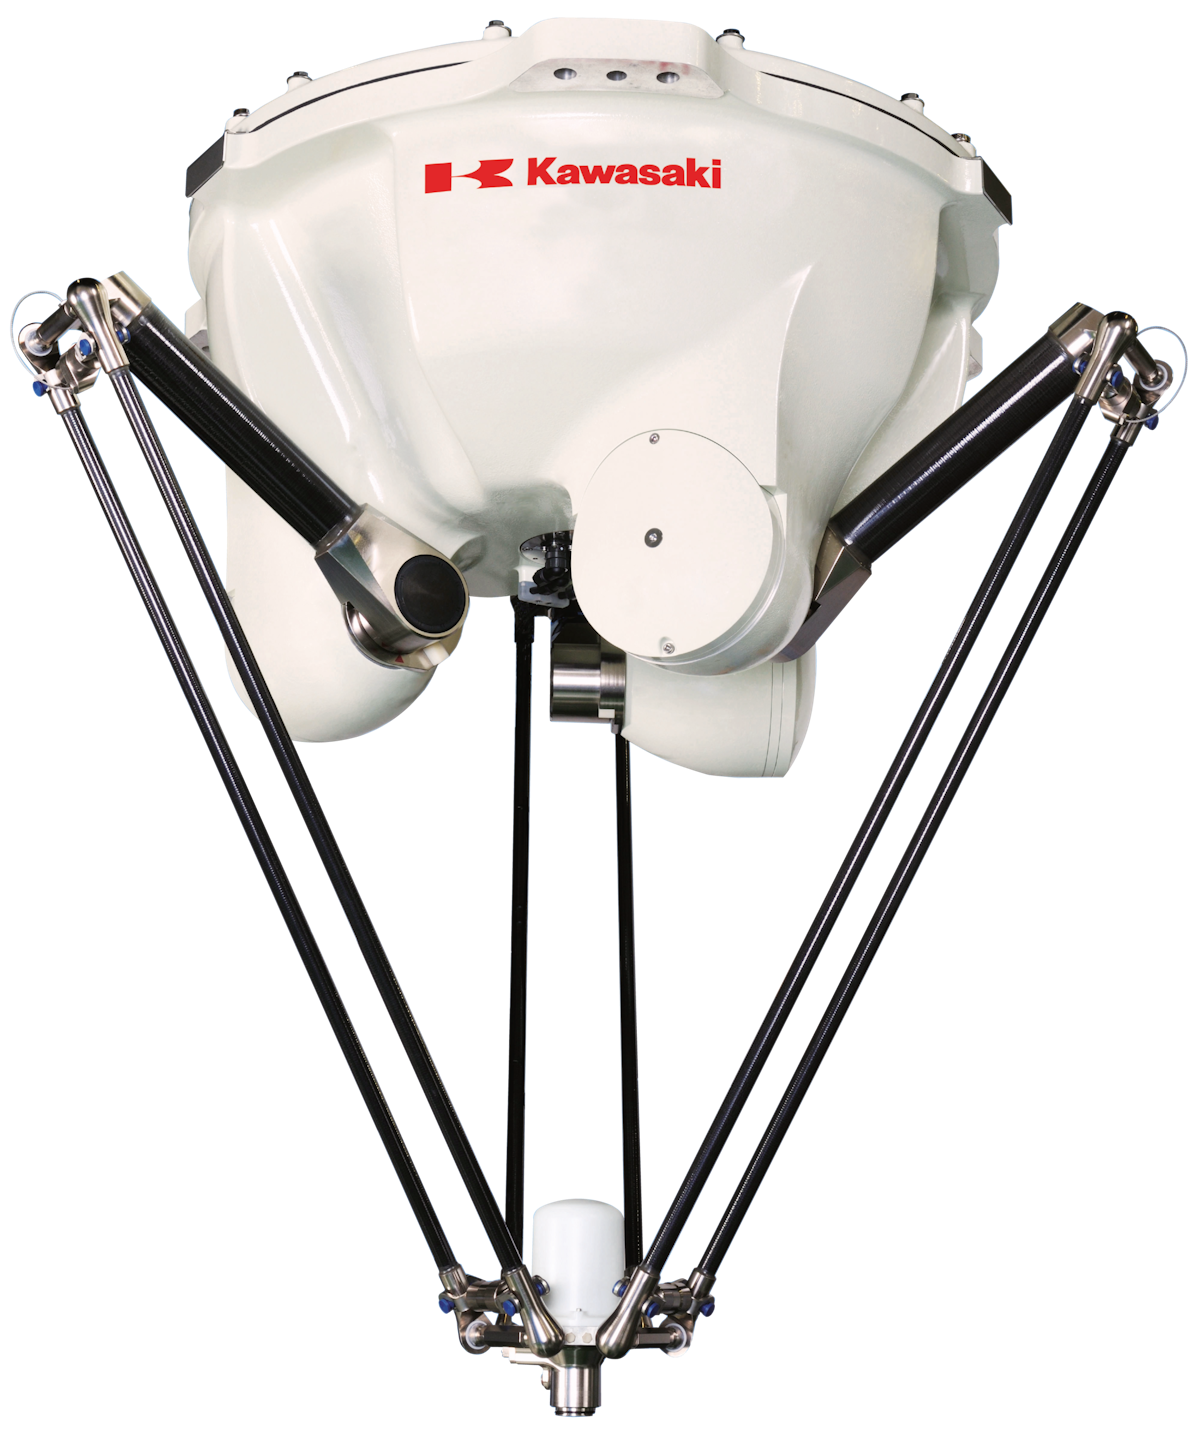 Akkumulerede Kent tæt ارفع نفسك عصا نفسه cpl robot kawasaki cost - santafemexicanrestaurant.com